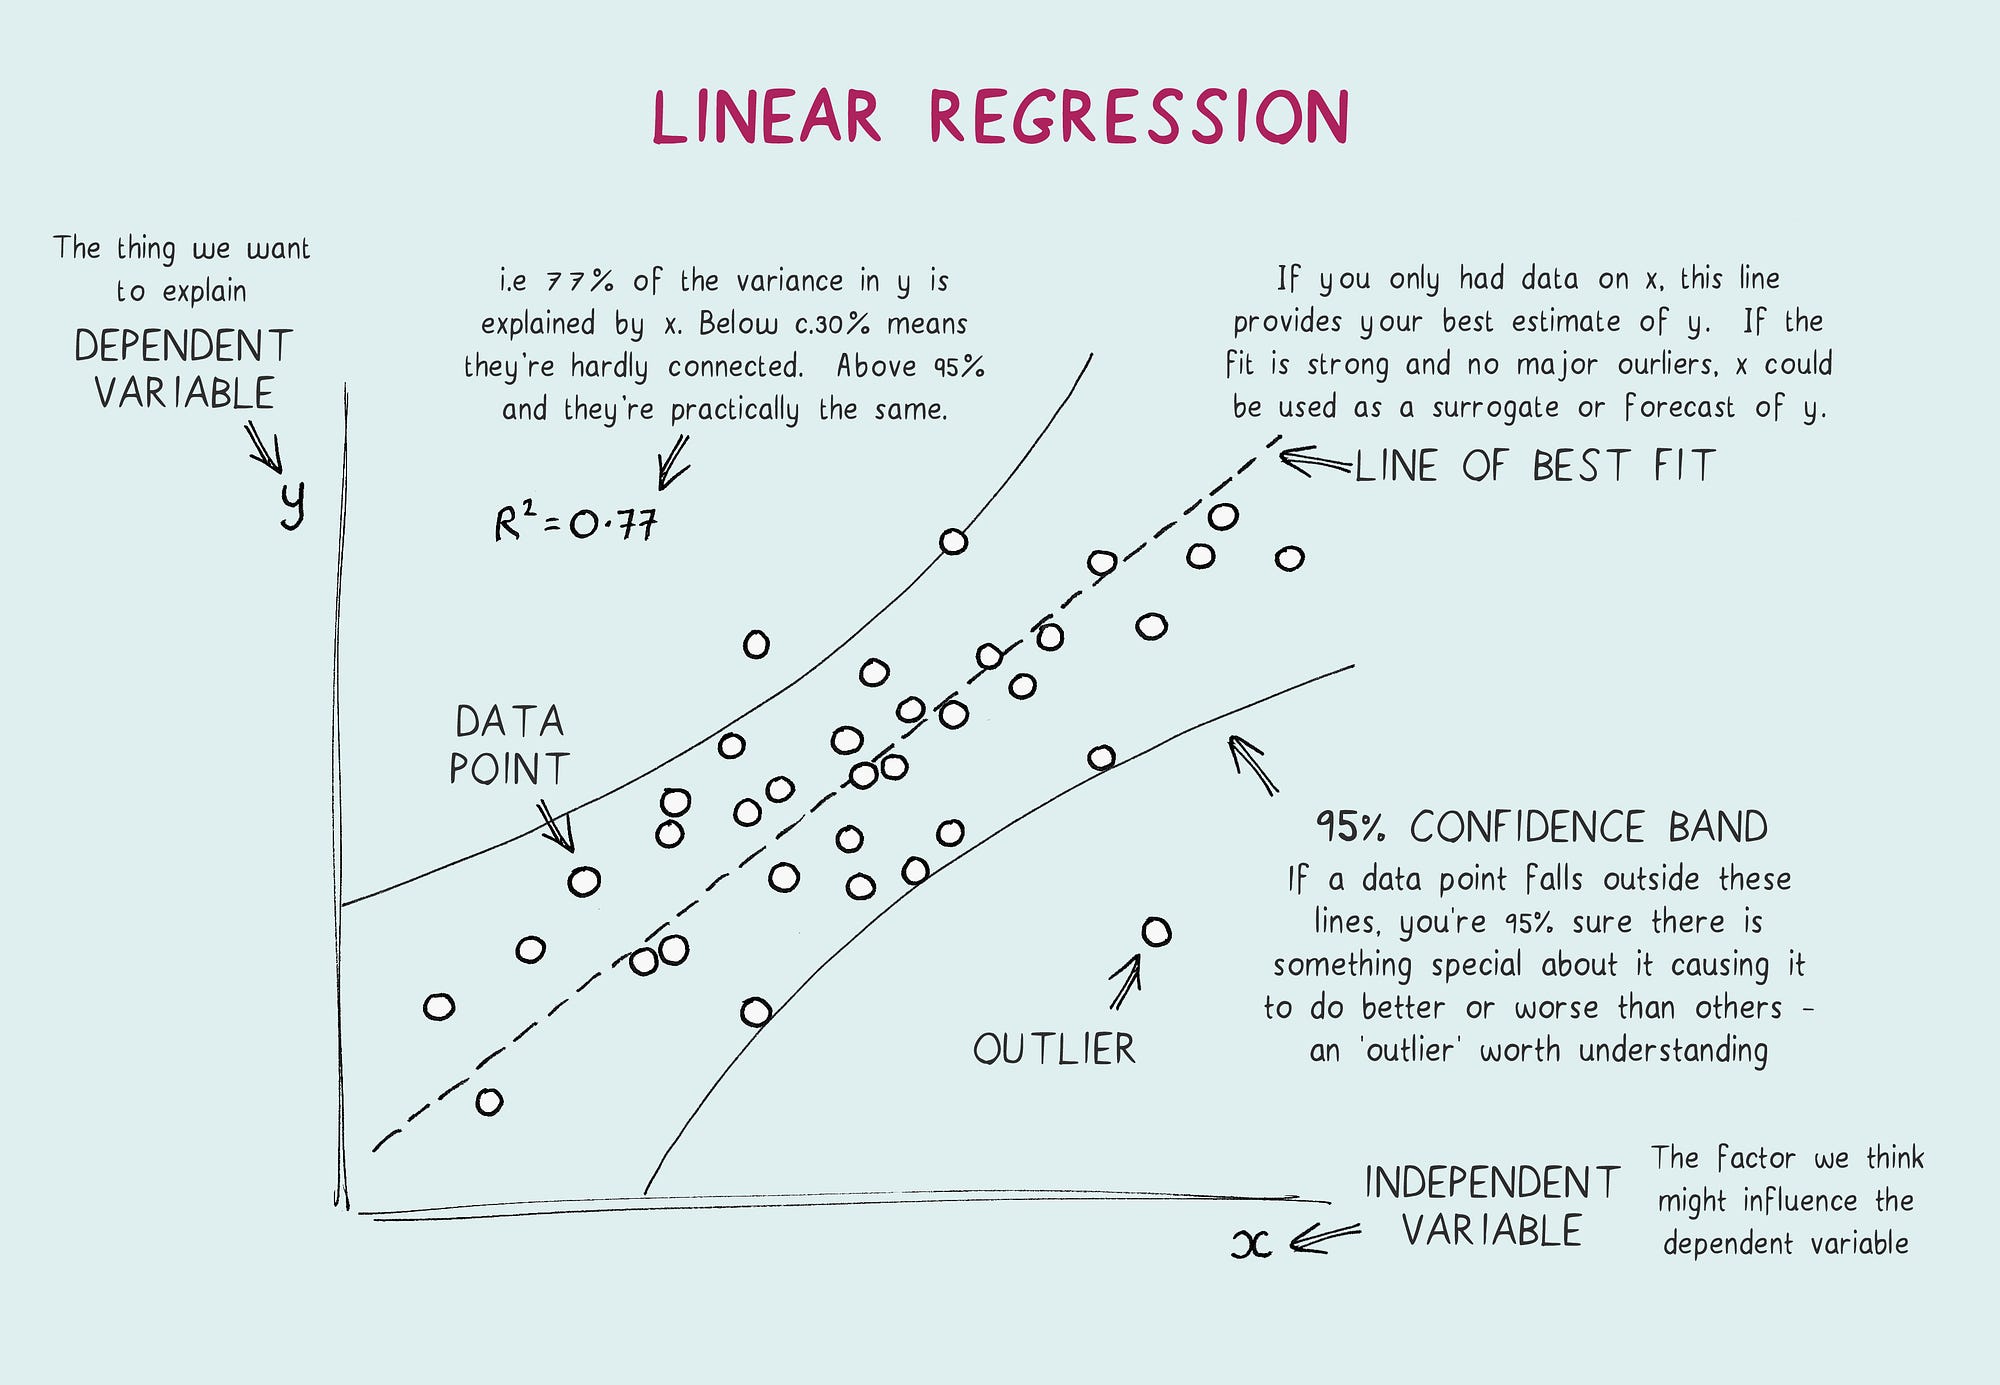 case study of regression analysis